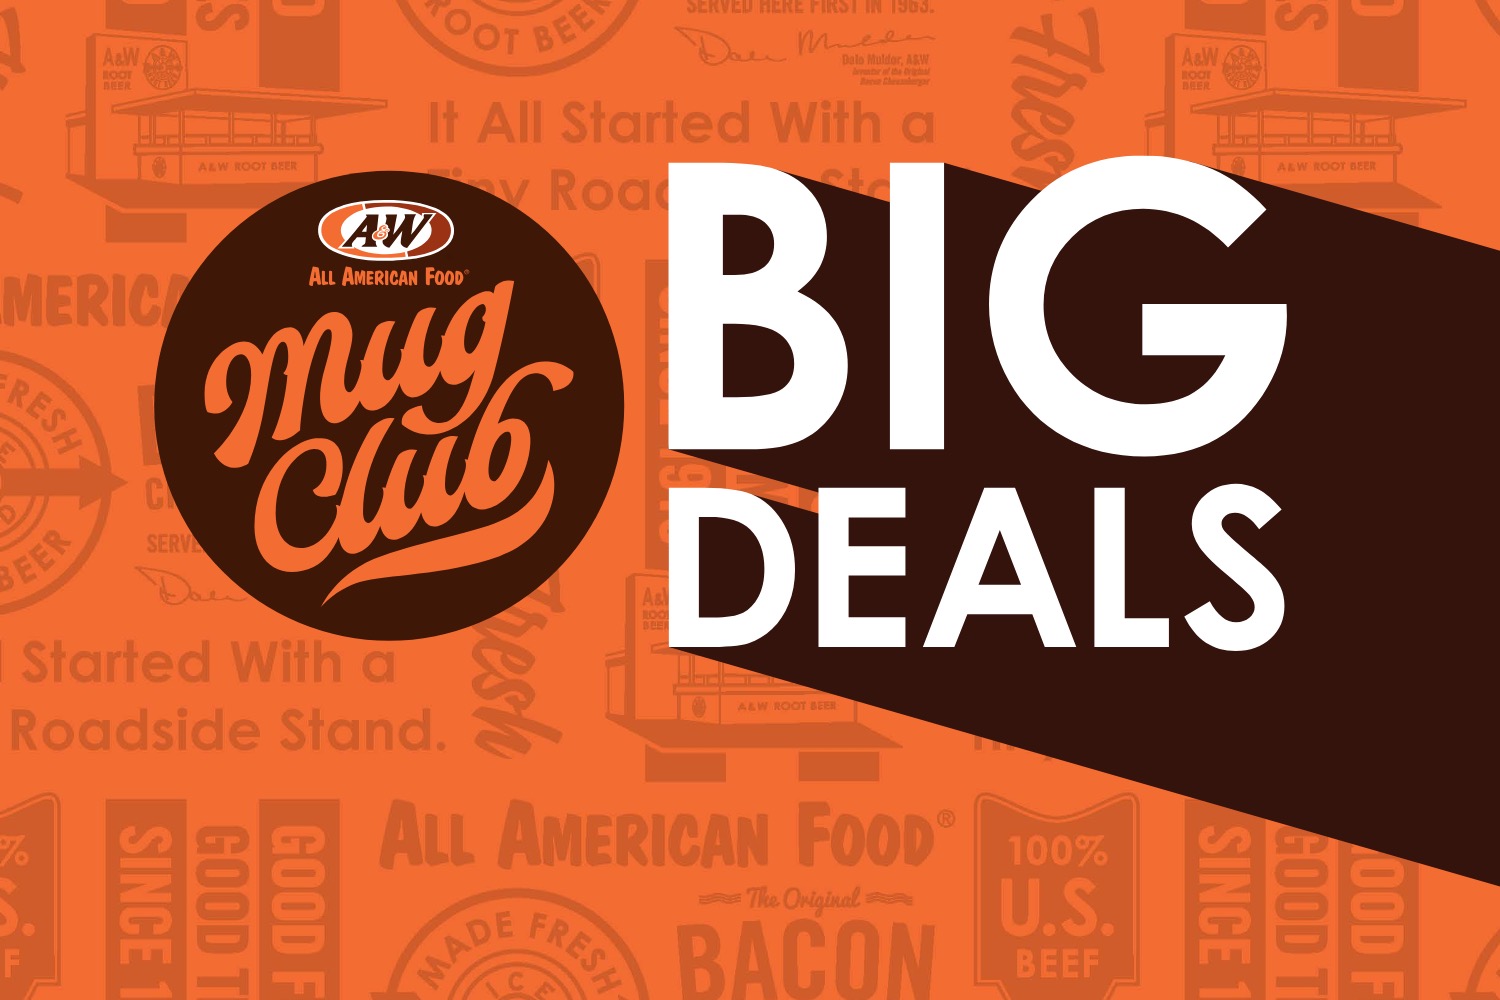 A&W Mug Club sign up for BIg Deals